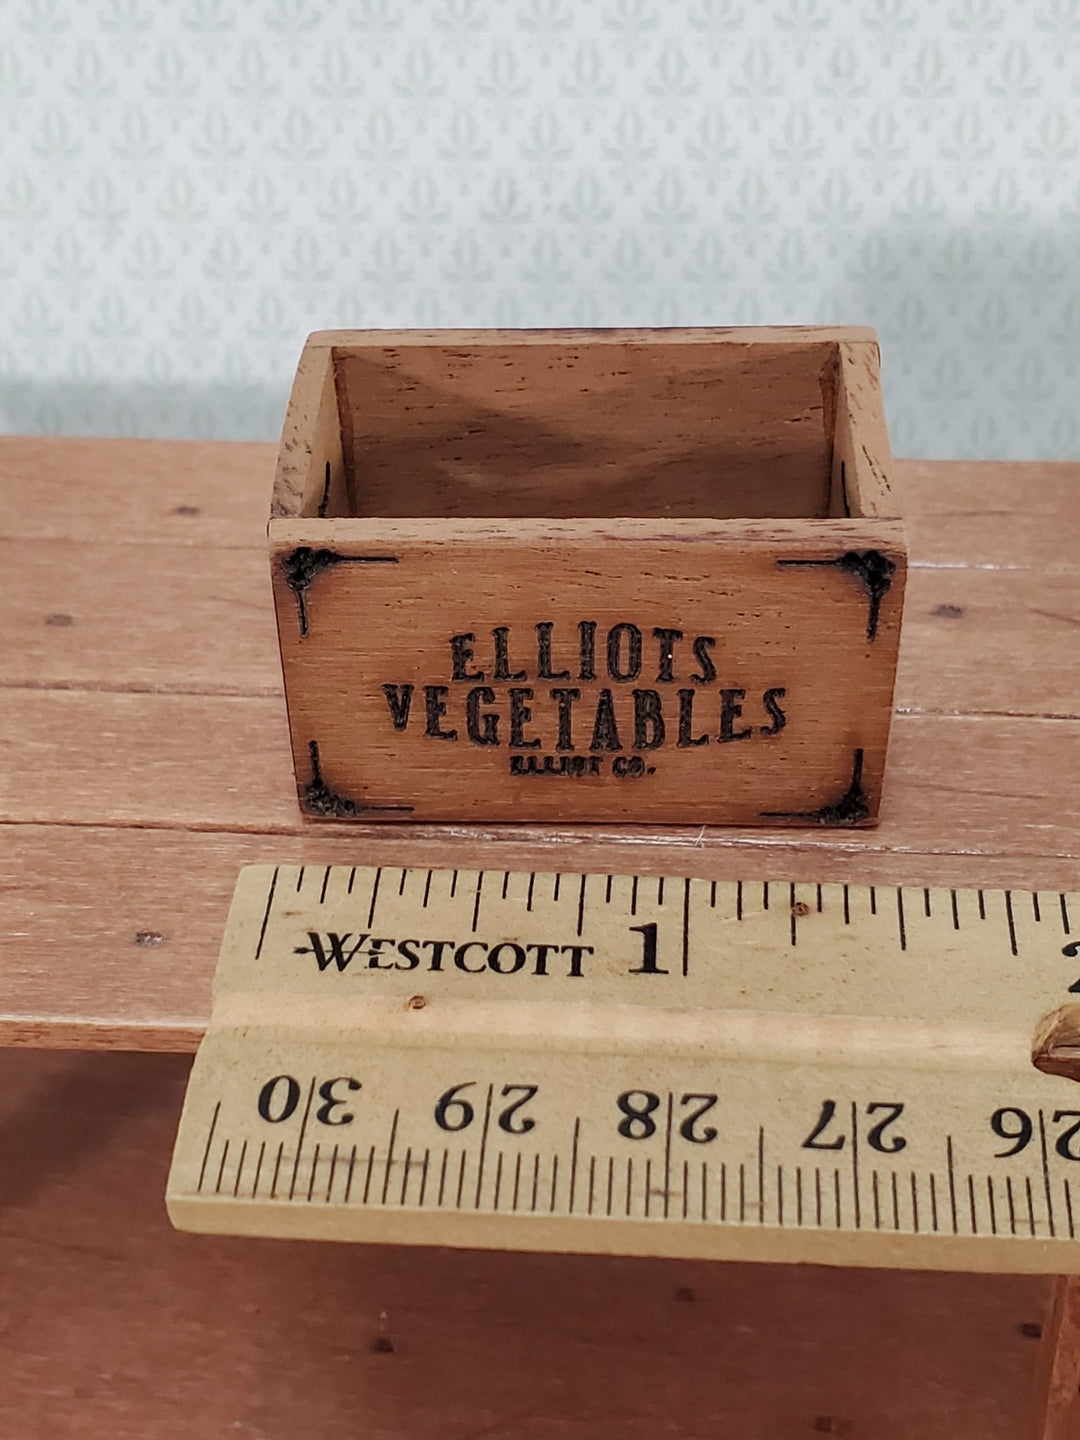 Dollhouse Wood Crate Vegetables Vintage Style 1:12 Scale Miniature Handmade - Miniature Crush